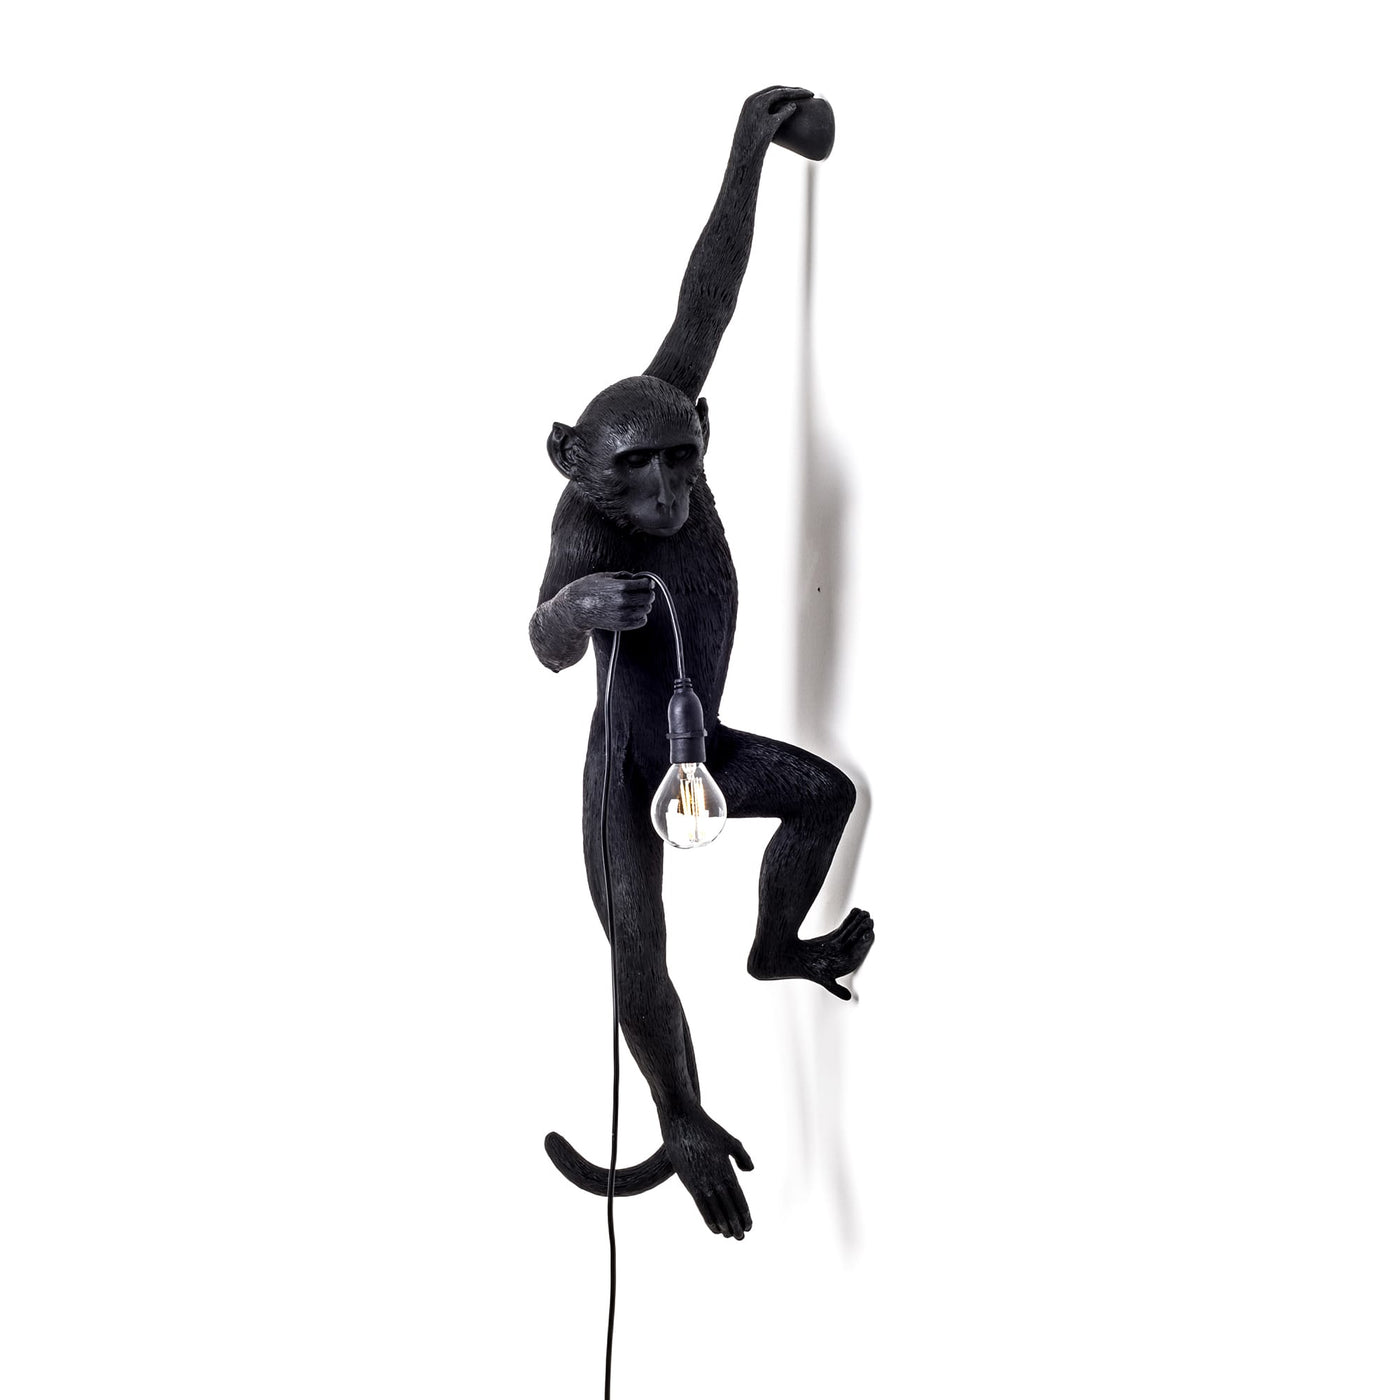 The Monkey Lamp Black - Hanging Left